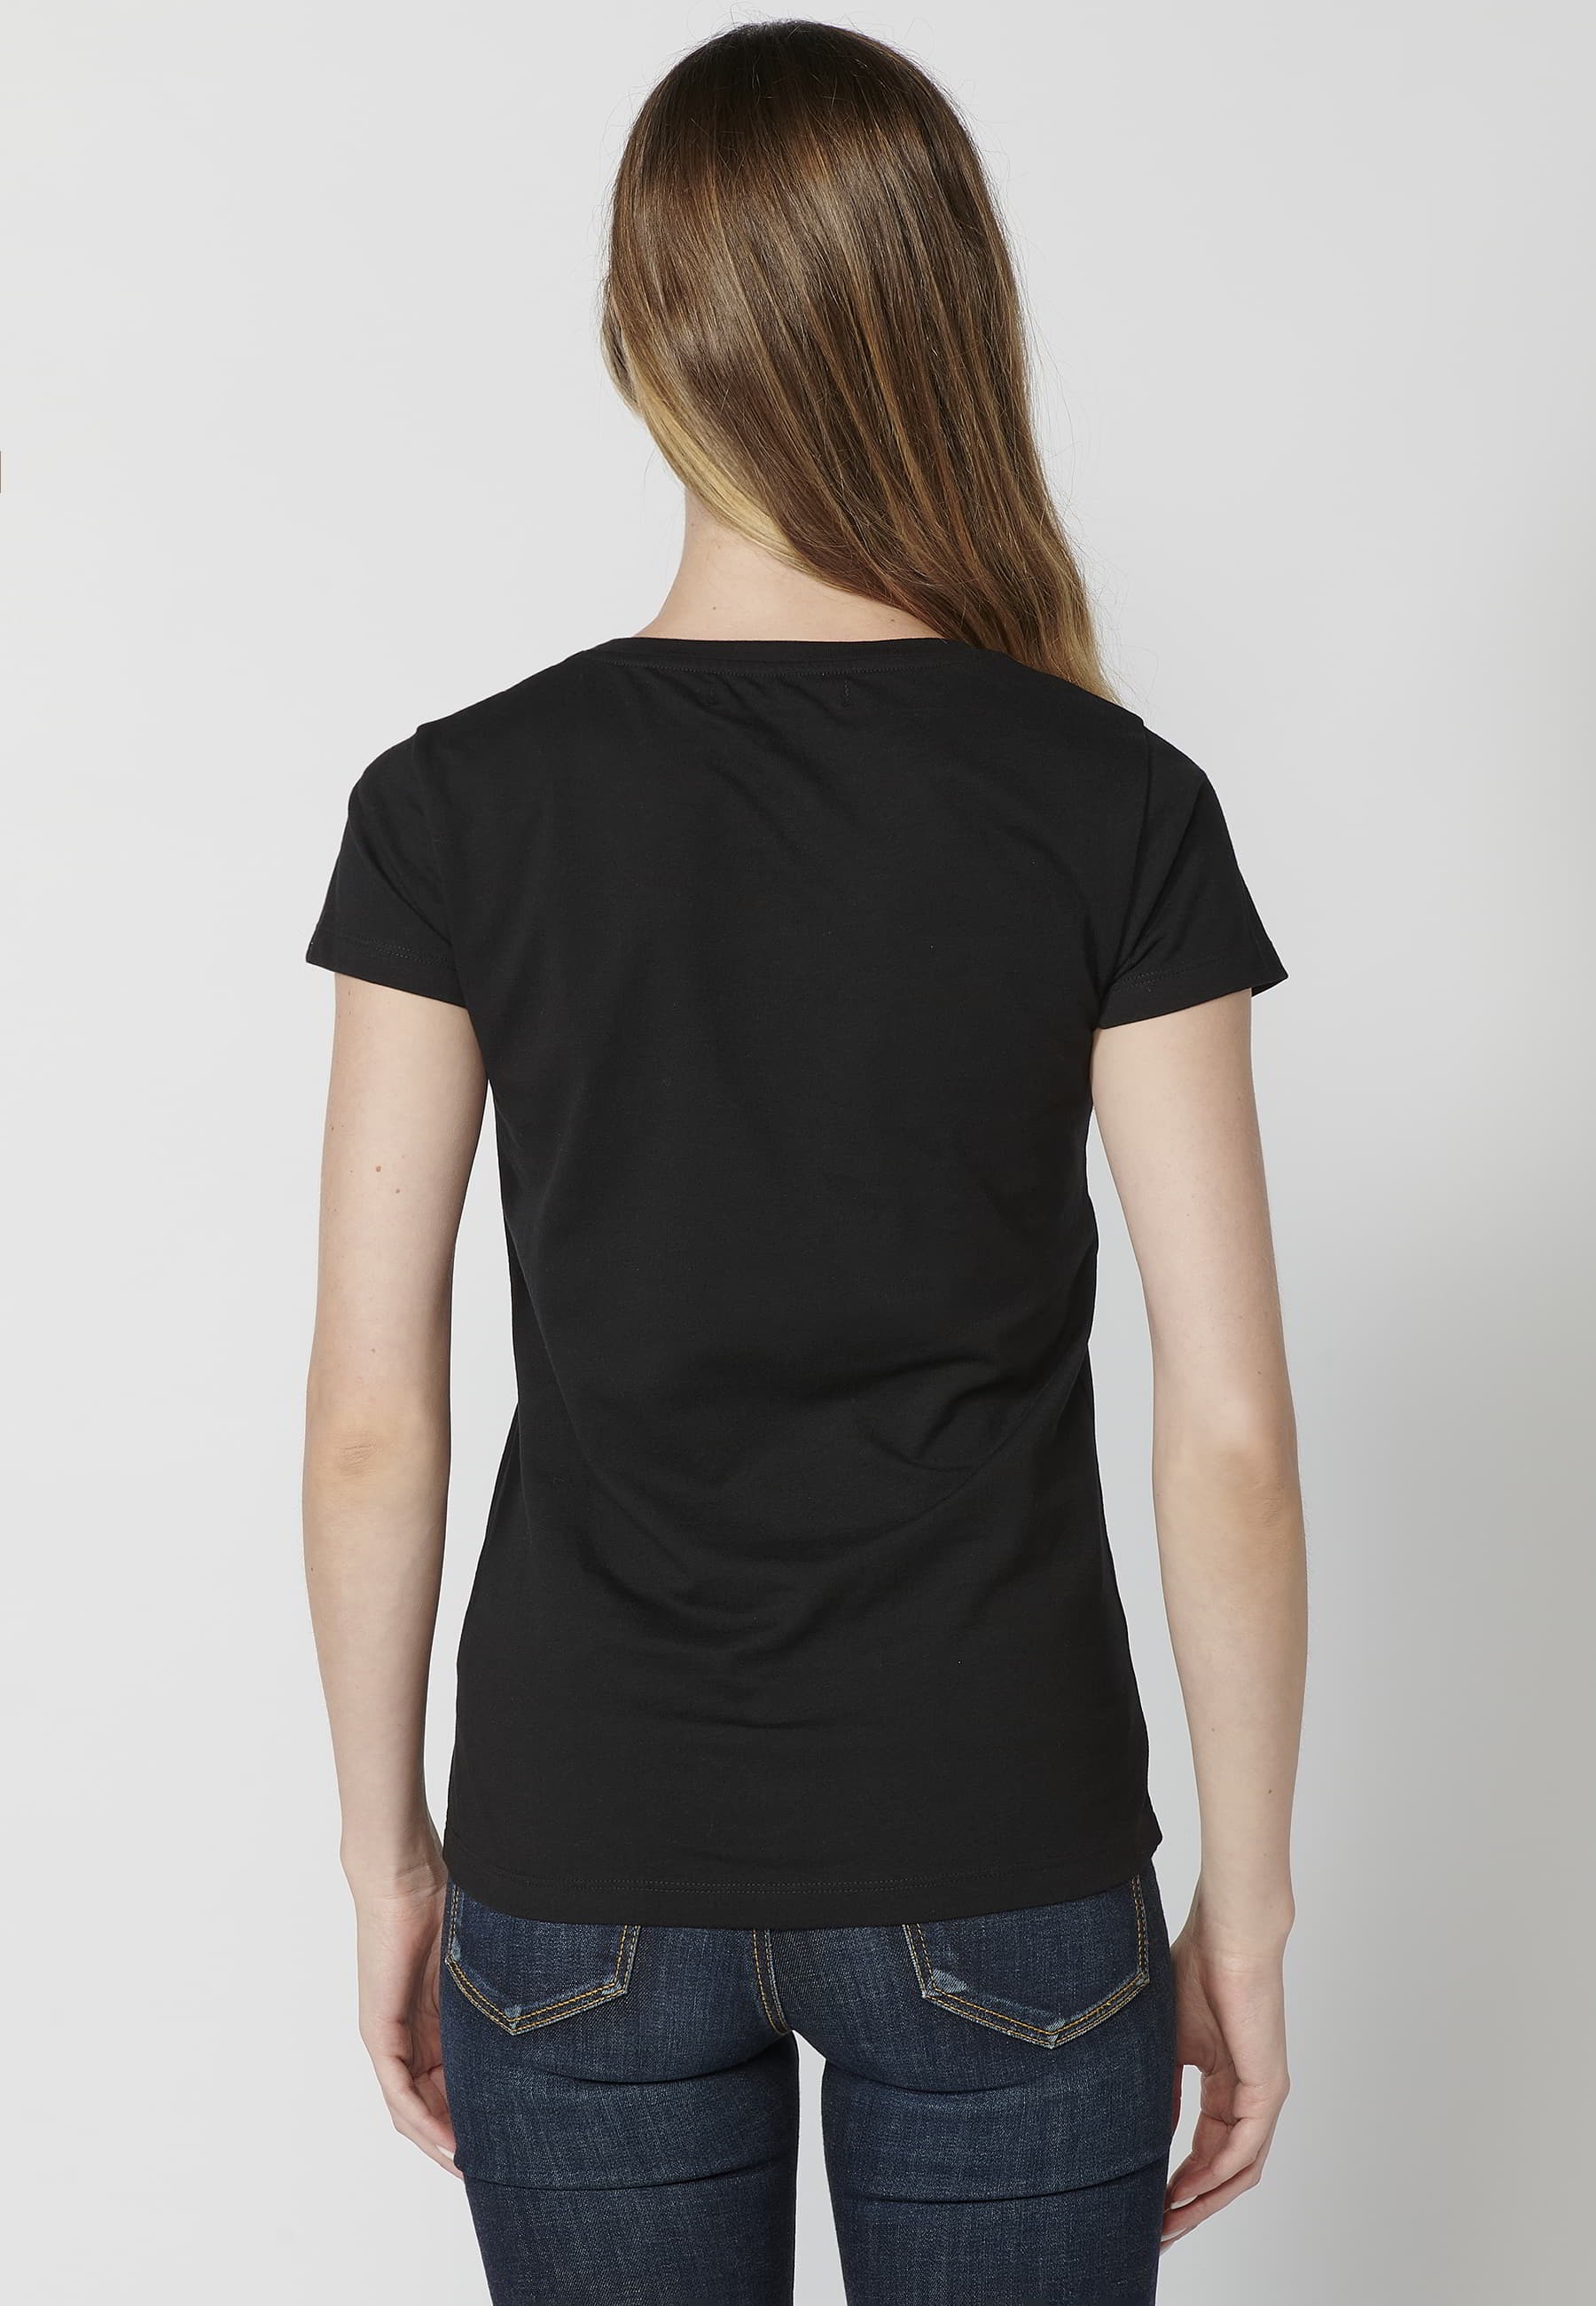 Camiseta manga corta de algodón estampado Koroshi color Negro para Mujer 5